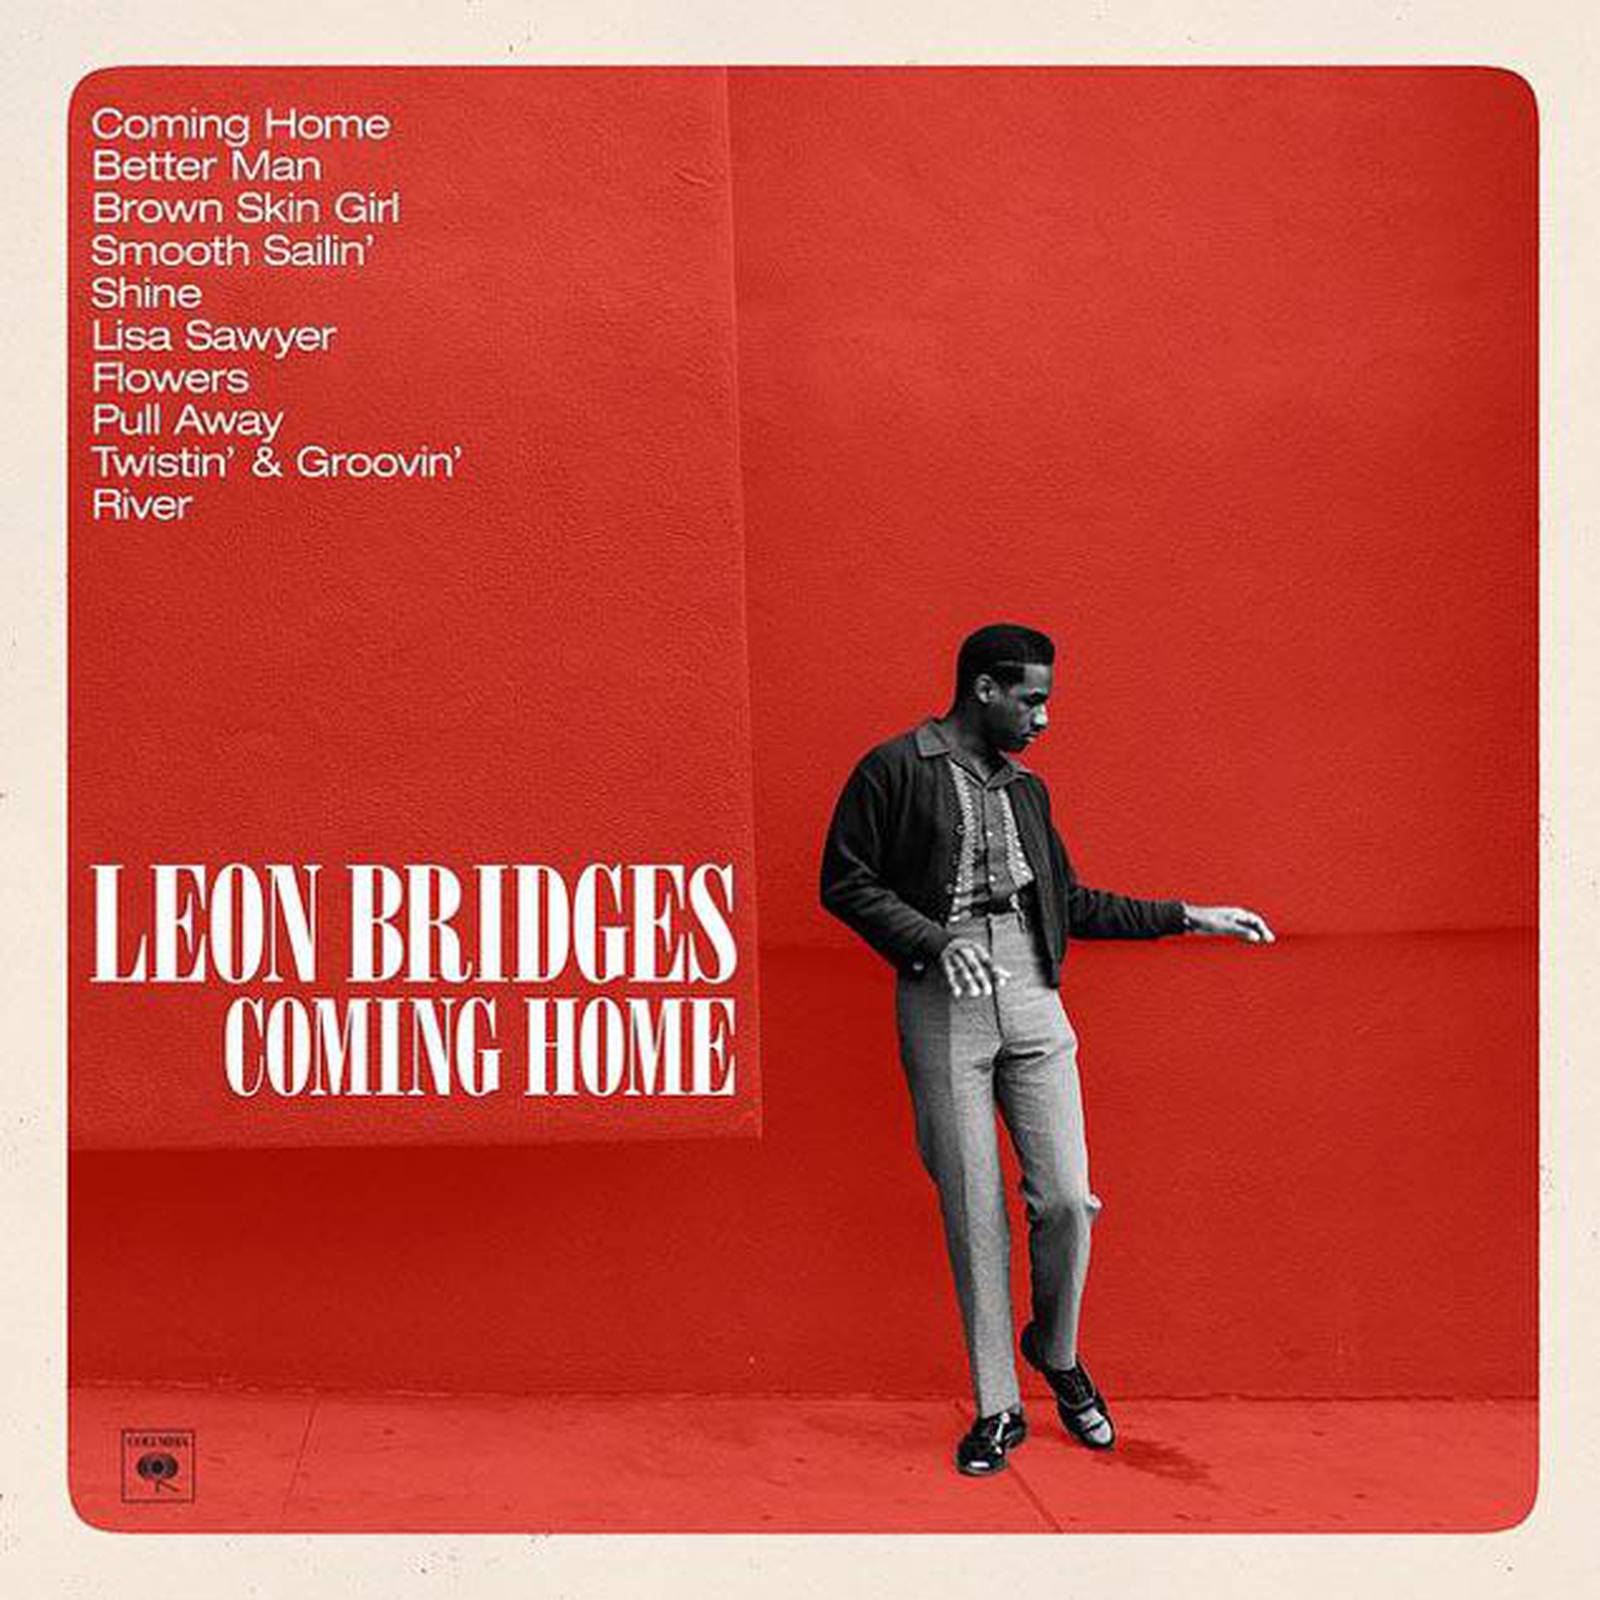 Leon Bridges Coming Home Album Review The Irish Times